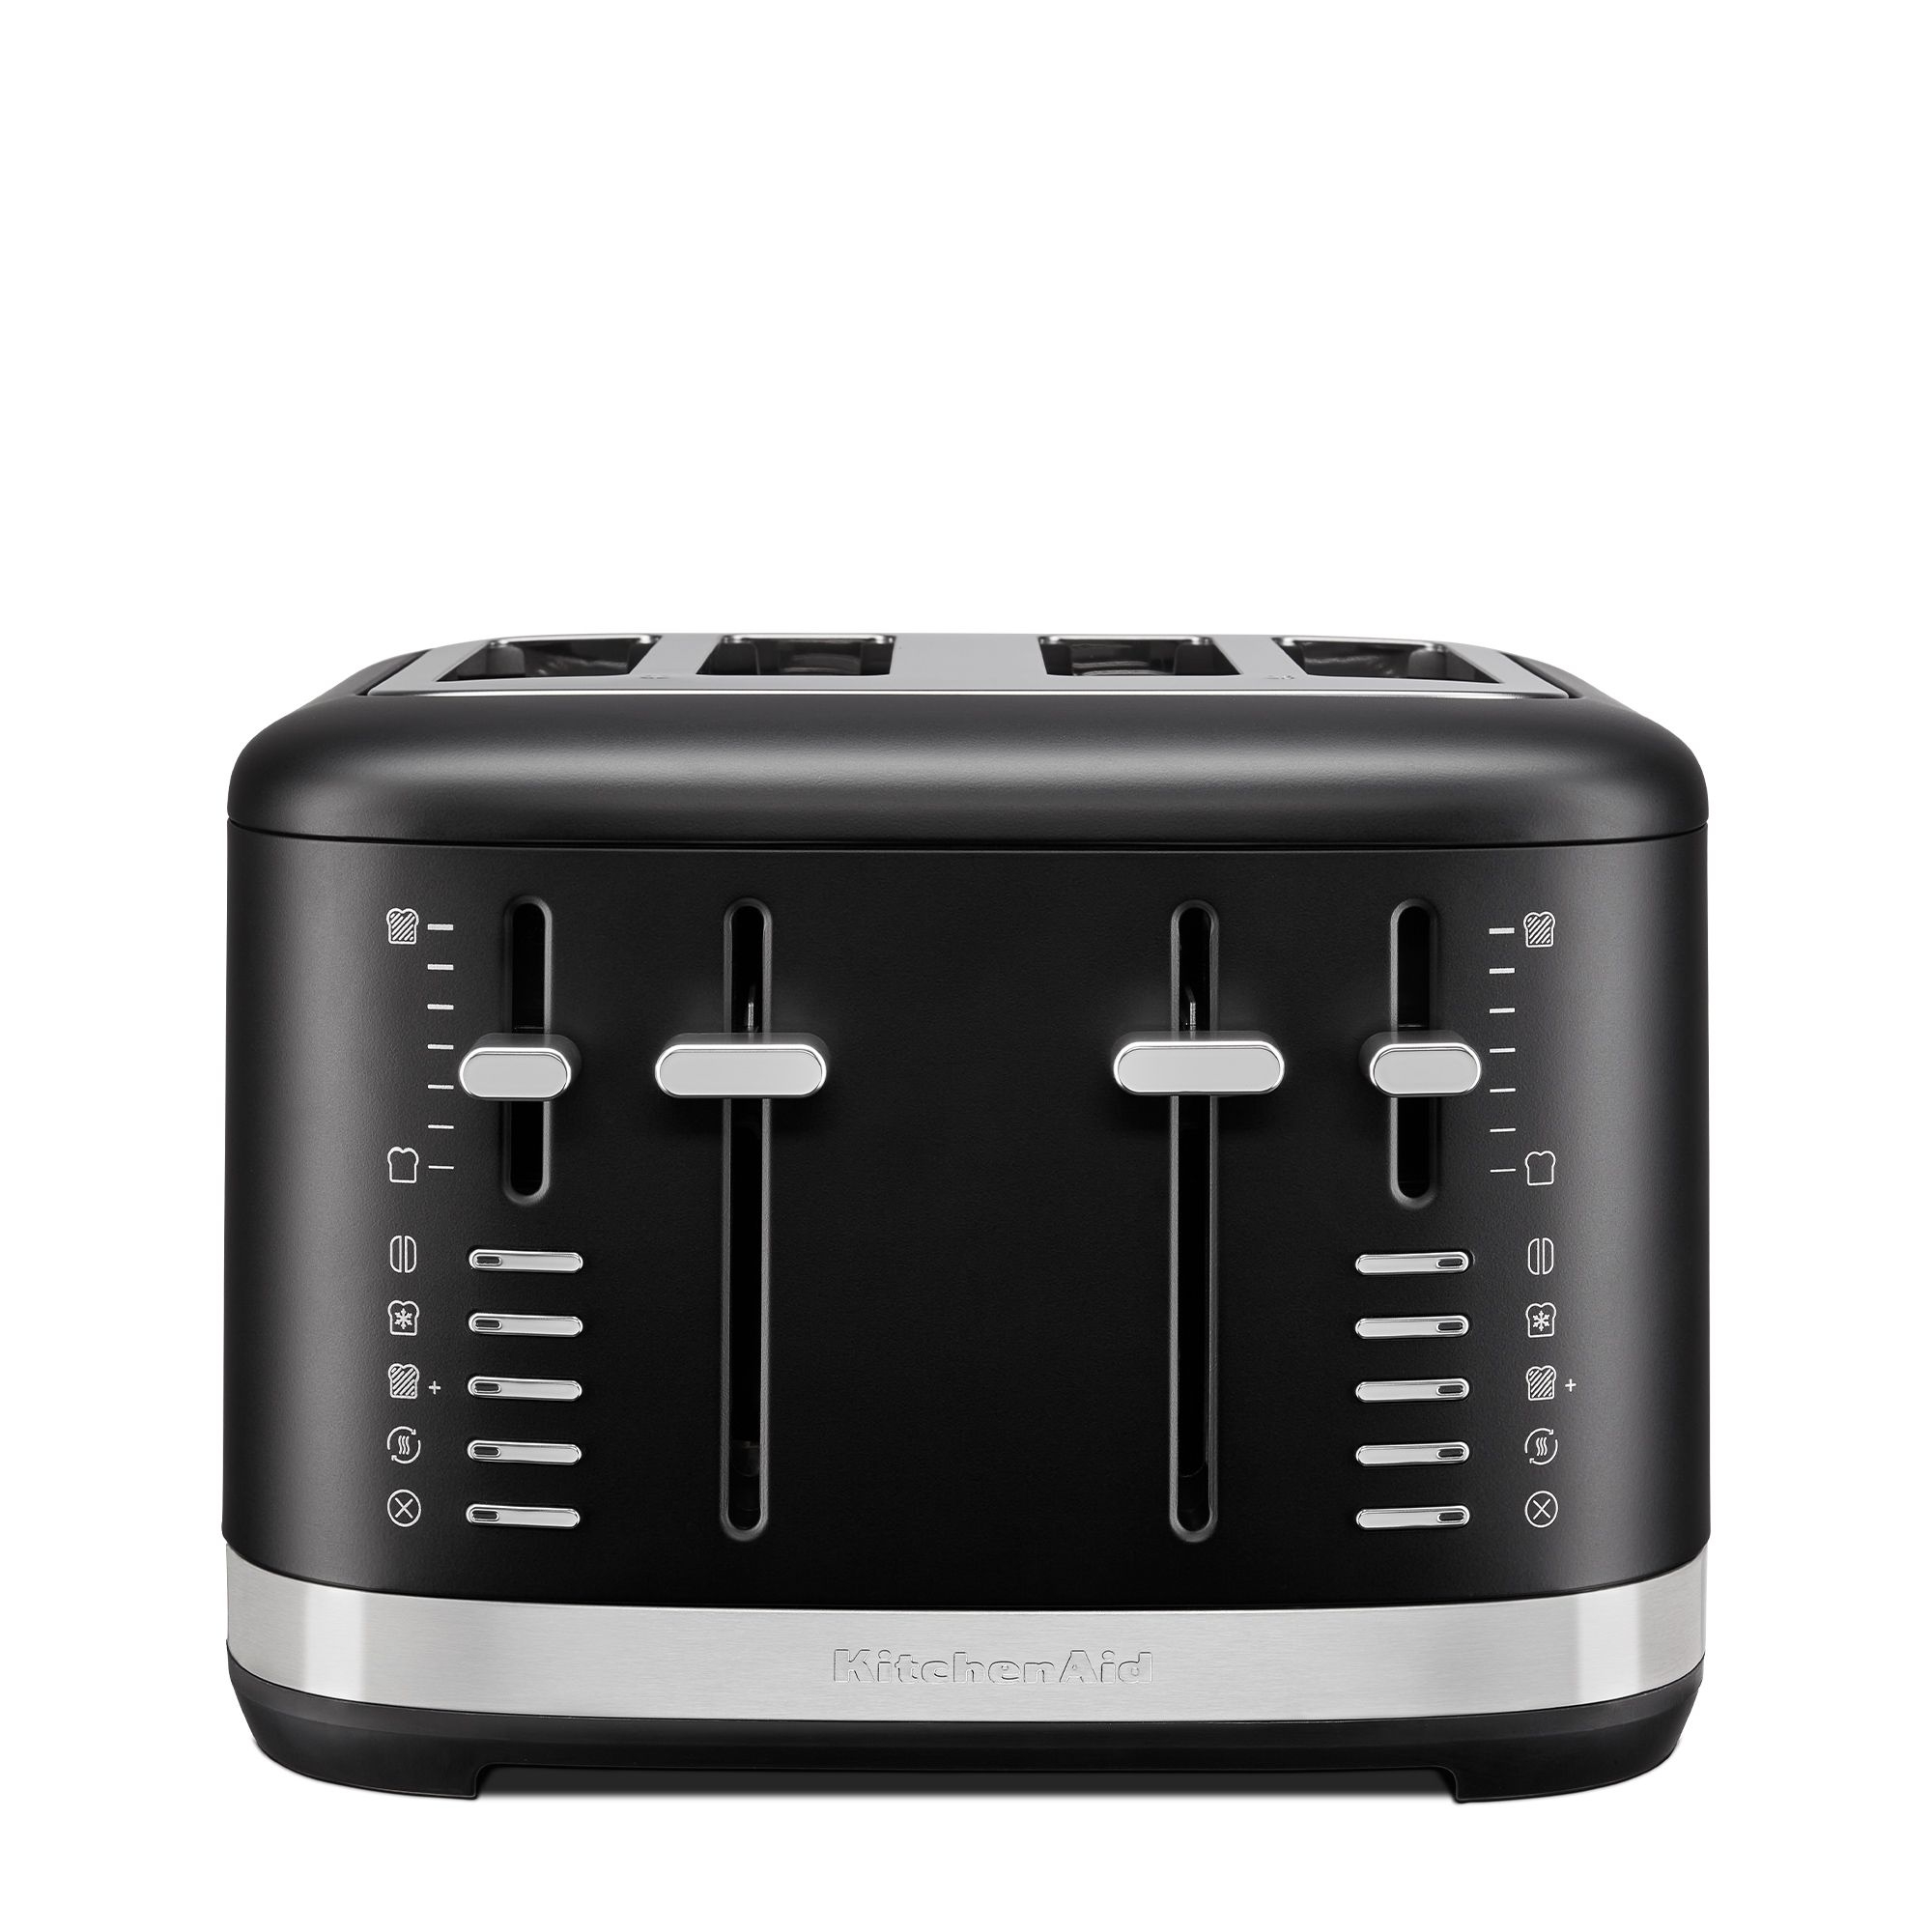 KitchenAid - Toaster with manual operation for 4 slices - Matt black